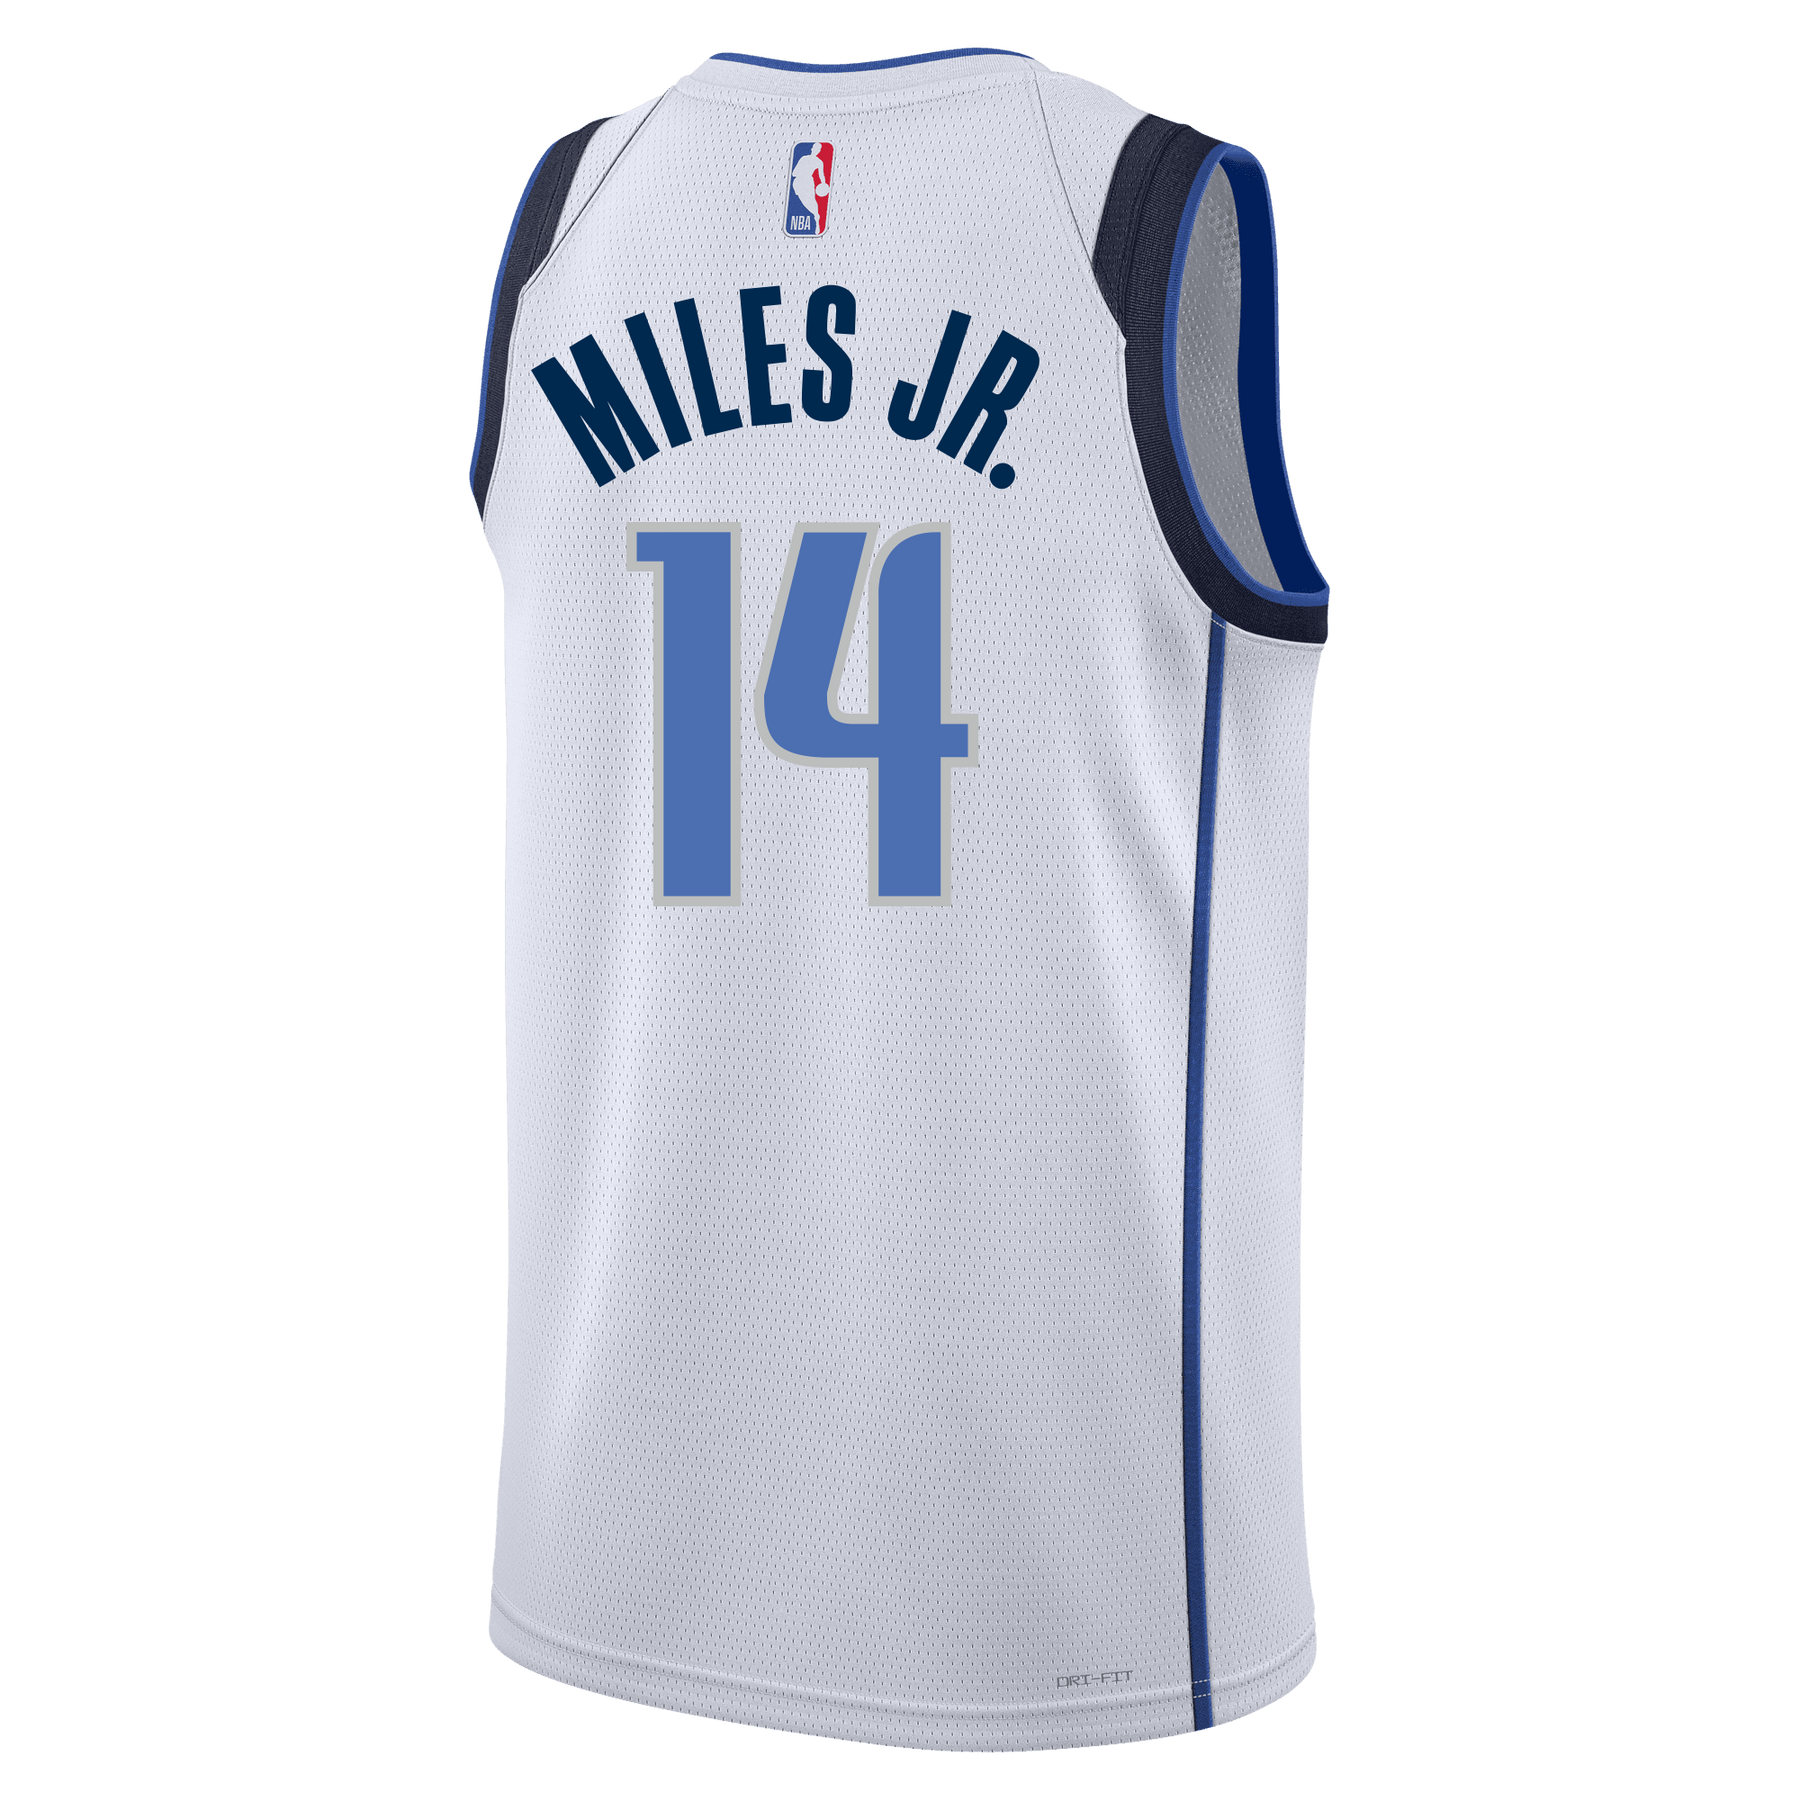 Nike Dallas Mavericks Seth Curry Icon Swingman Jersey M / Game Royal